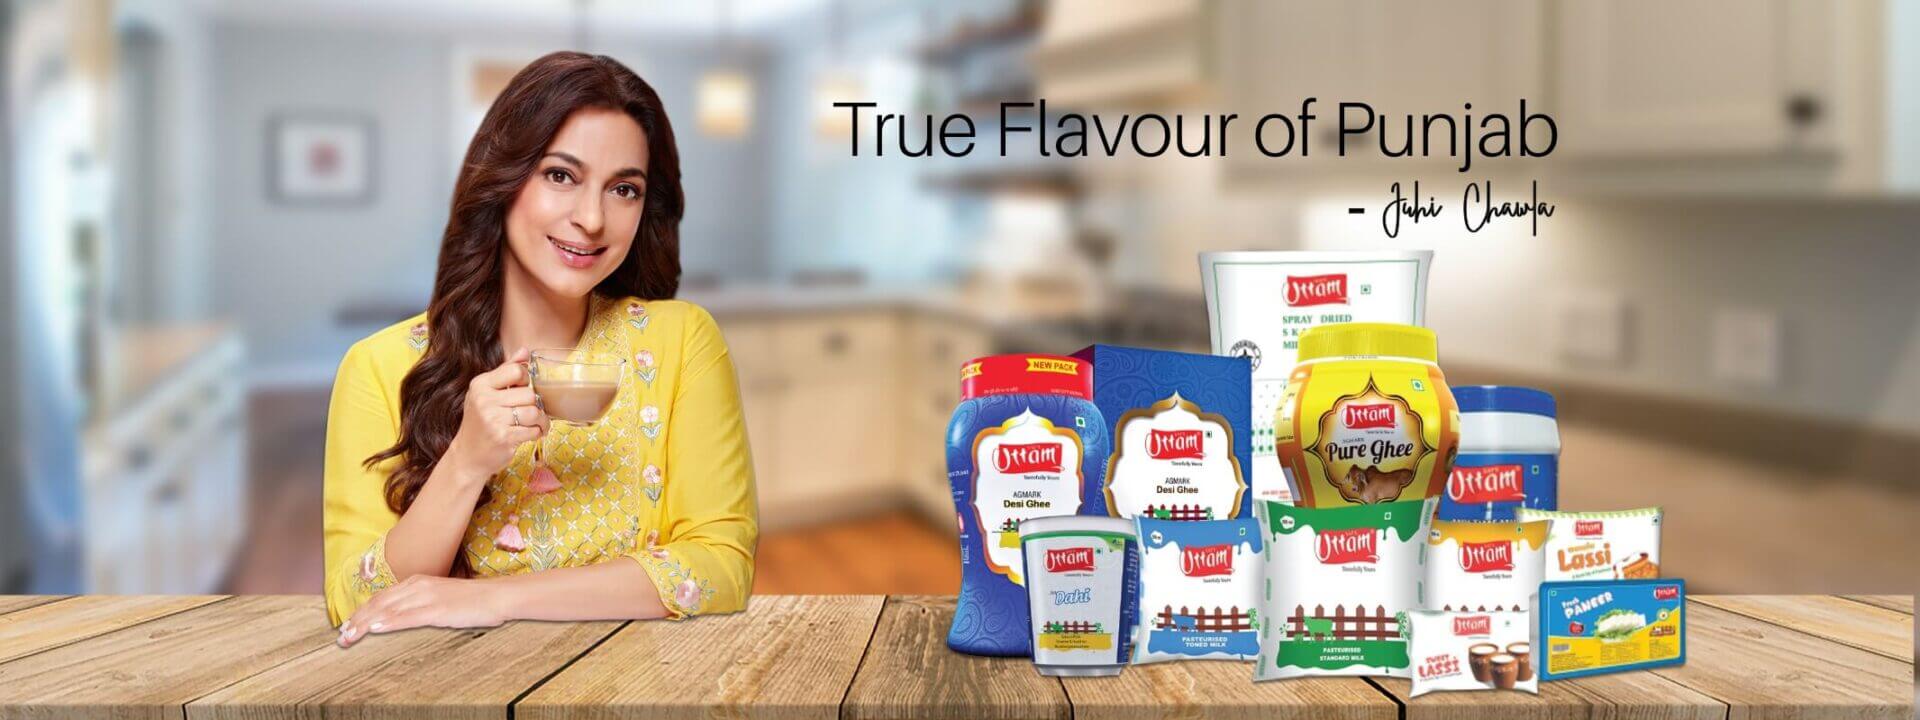 Uttam - True Flavour Of Punjab - Juhi Chawla - Banner